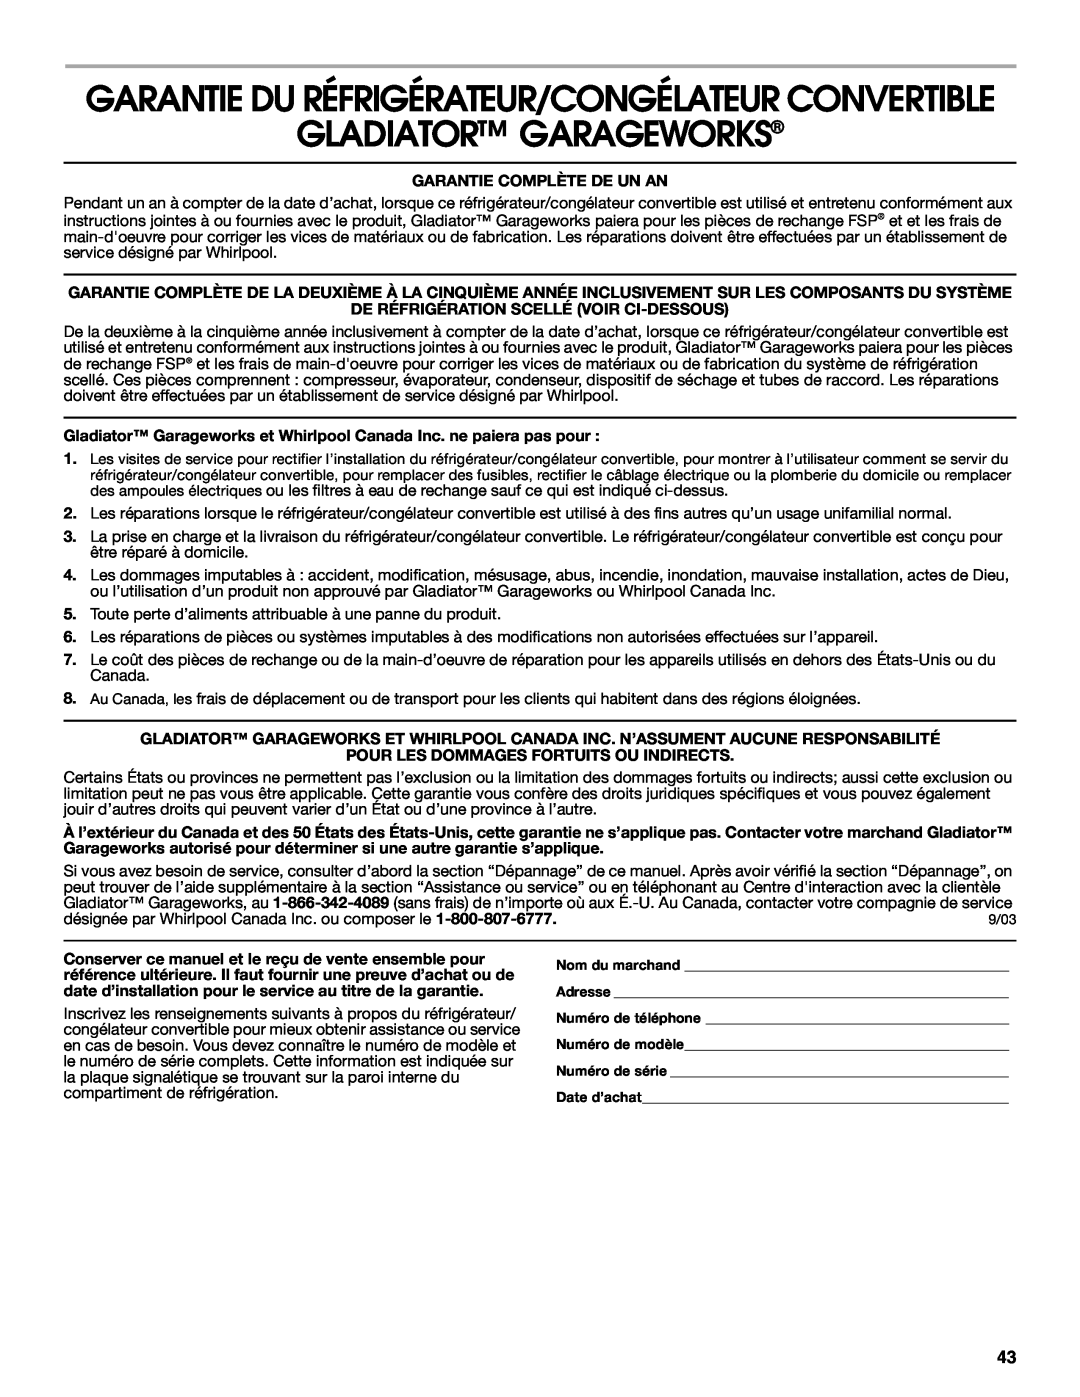 Whirlpool GAFZ21XXMK00 manual Garantie Du Réfrigérateur/Congélateur Convertible, Gladiator Garageworks 